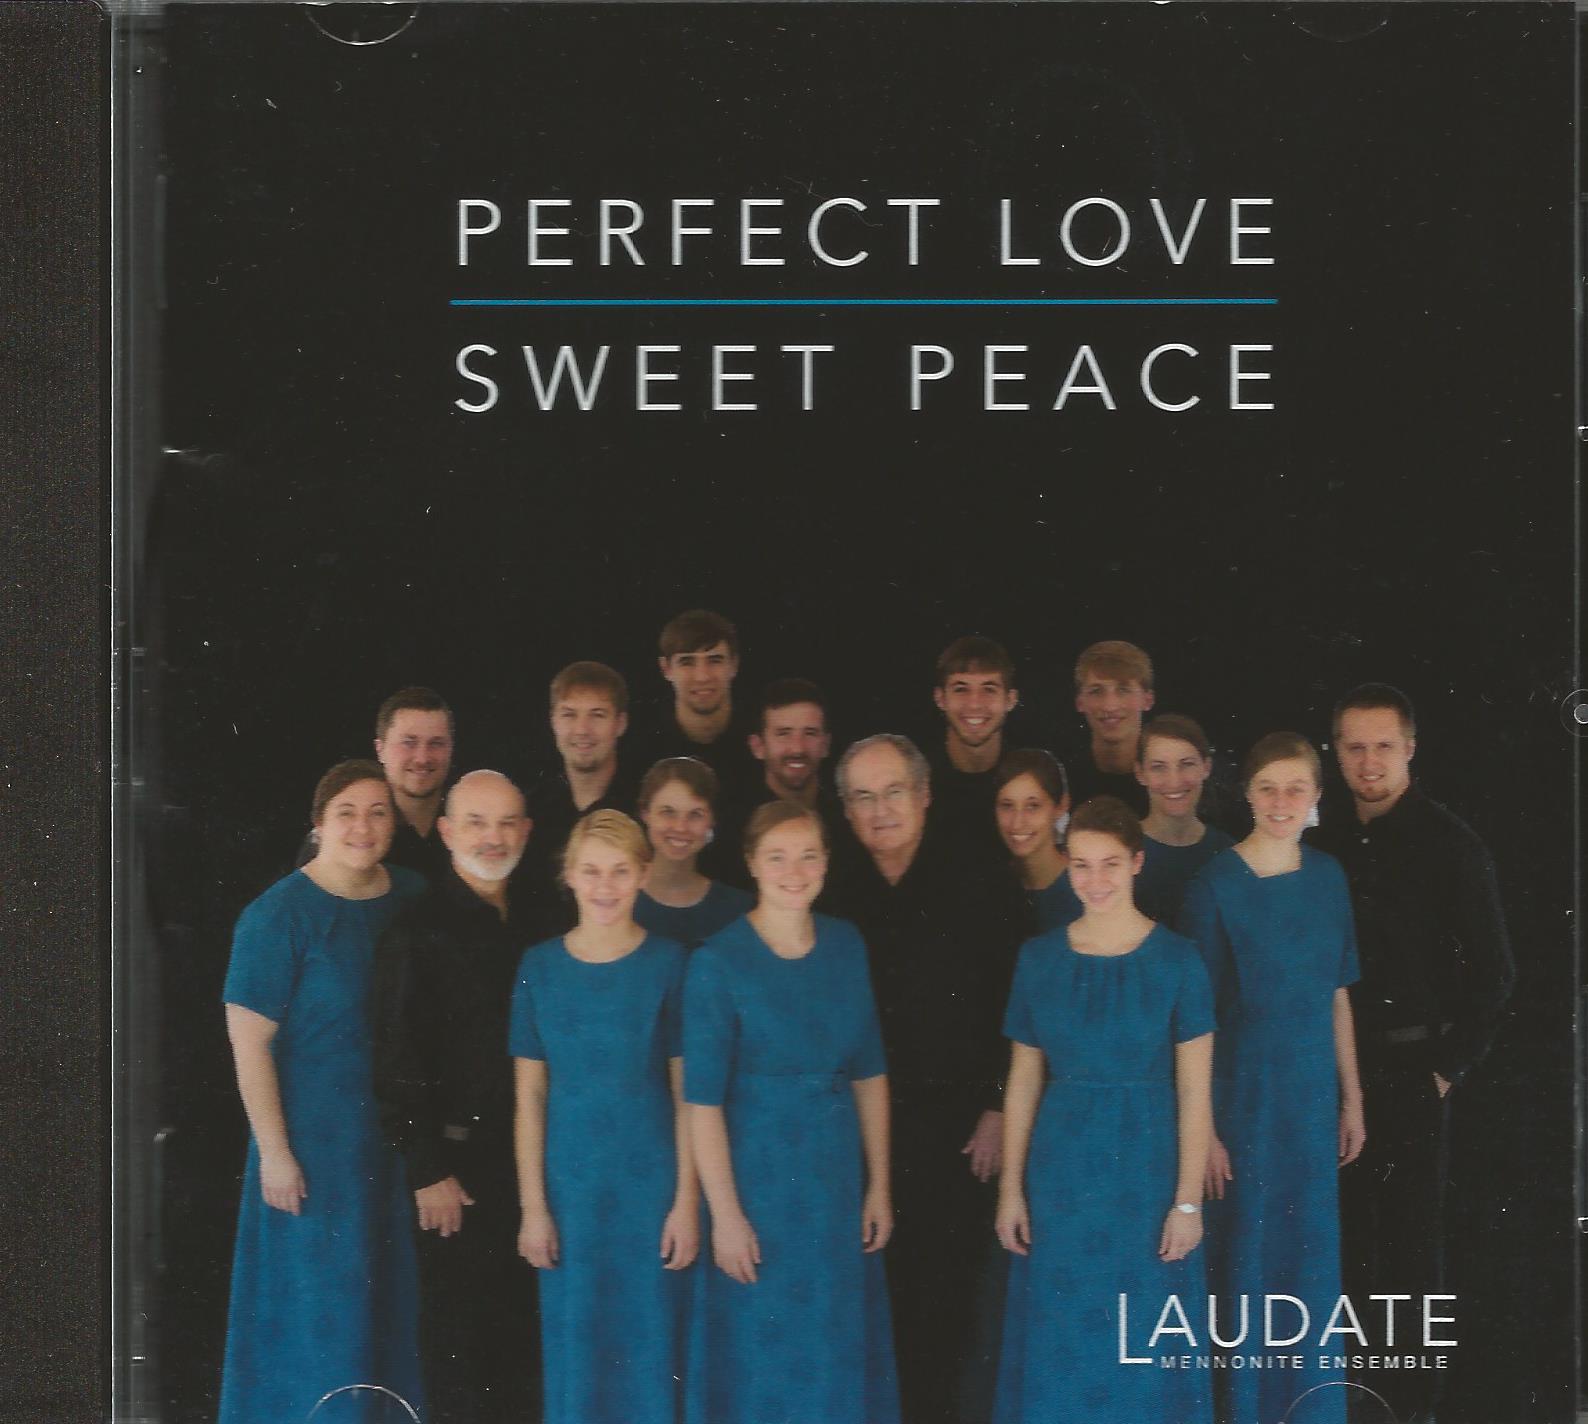 PERFECT LOVE - SWEET PEACE Laudate Mennonite Ensemble